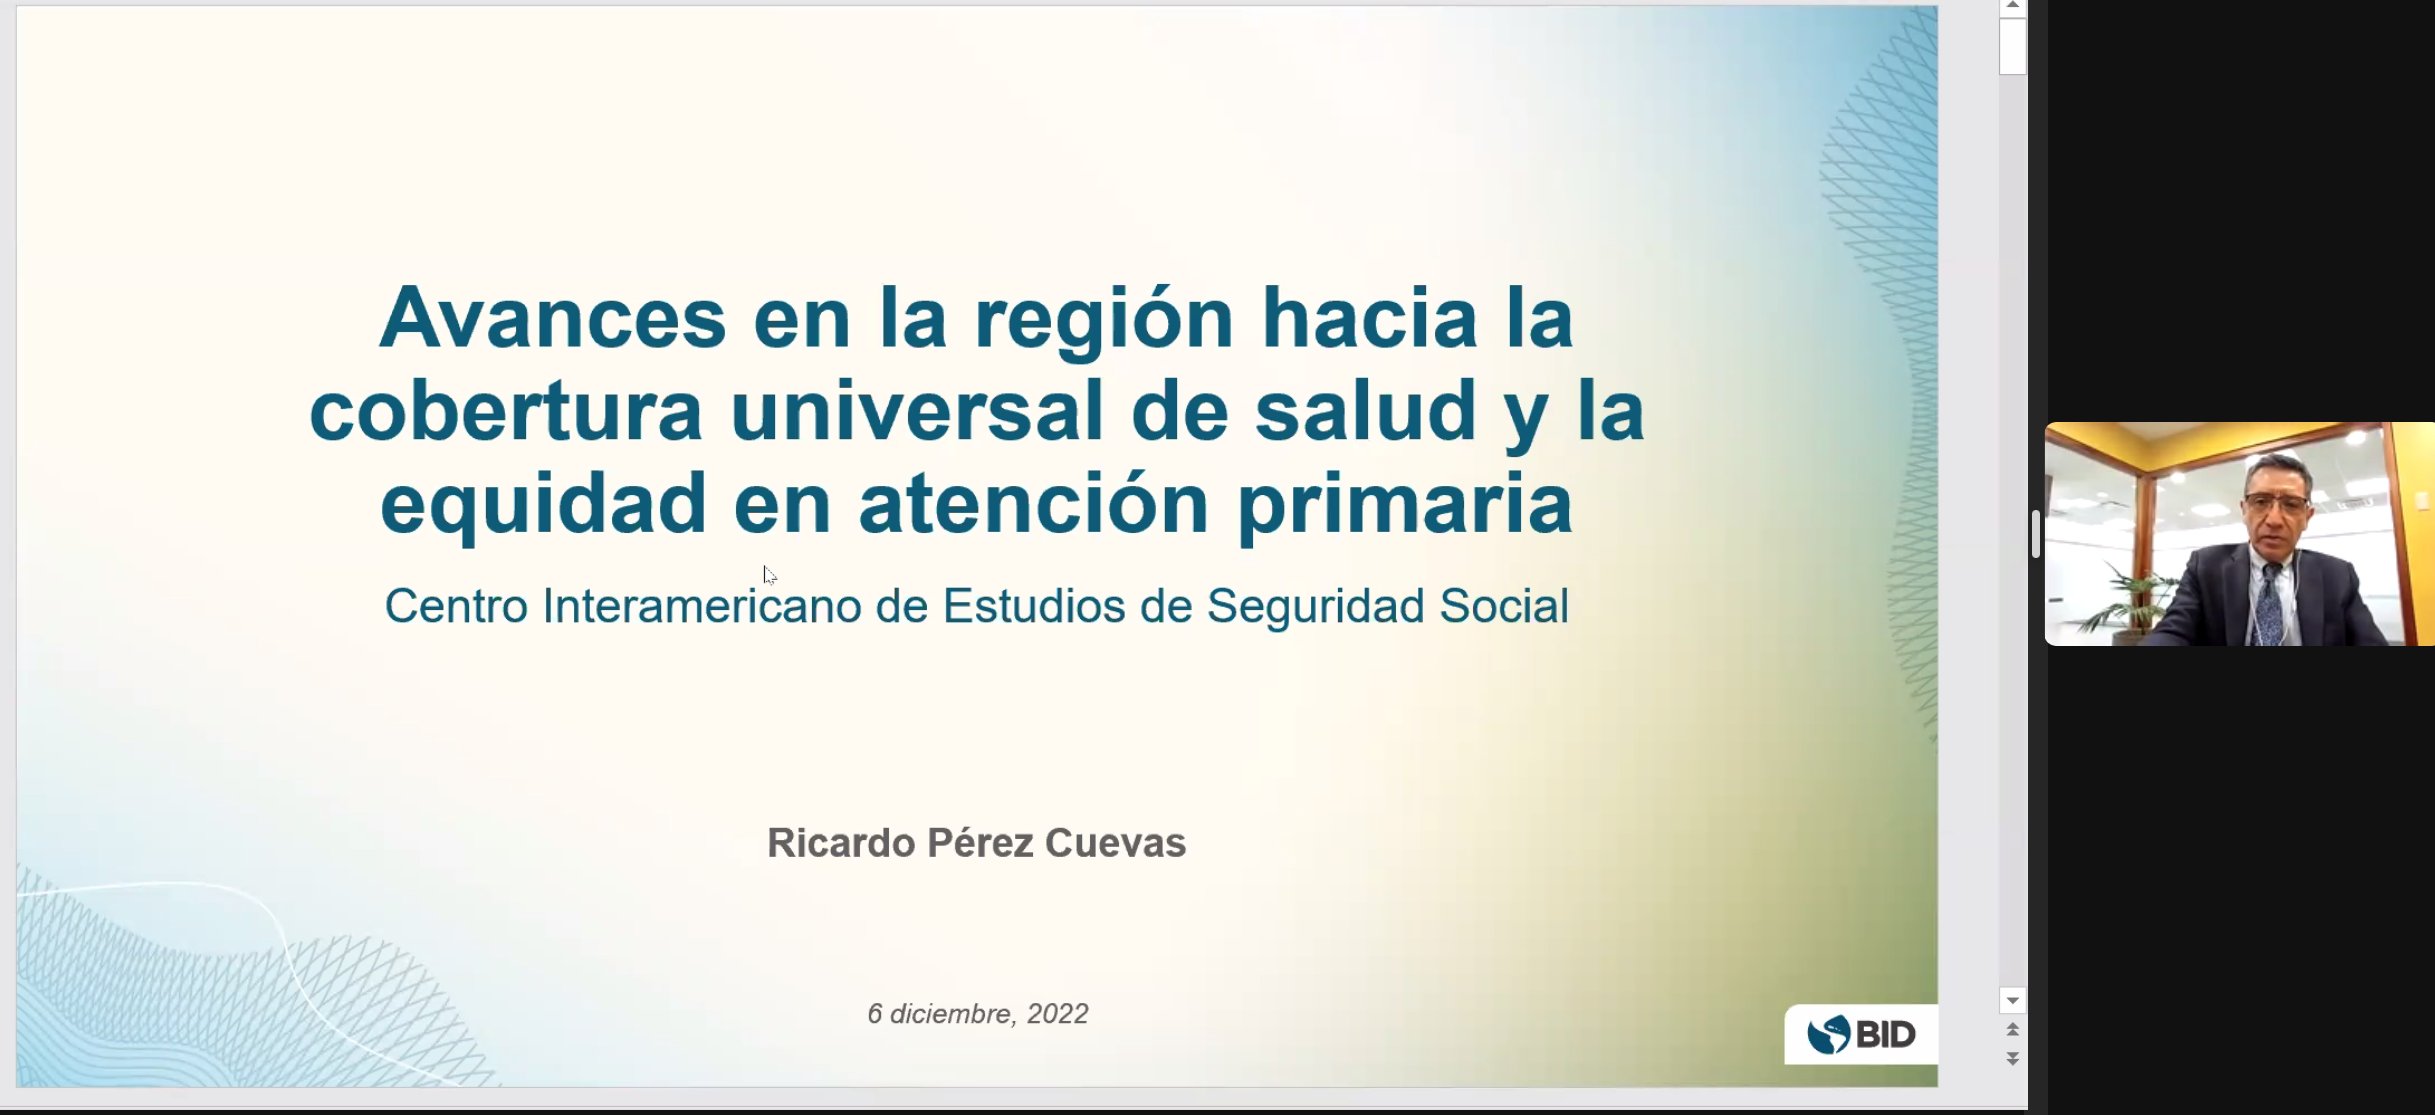 Dr. Ricardo Pérez Cuevas